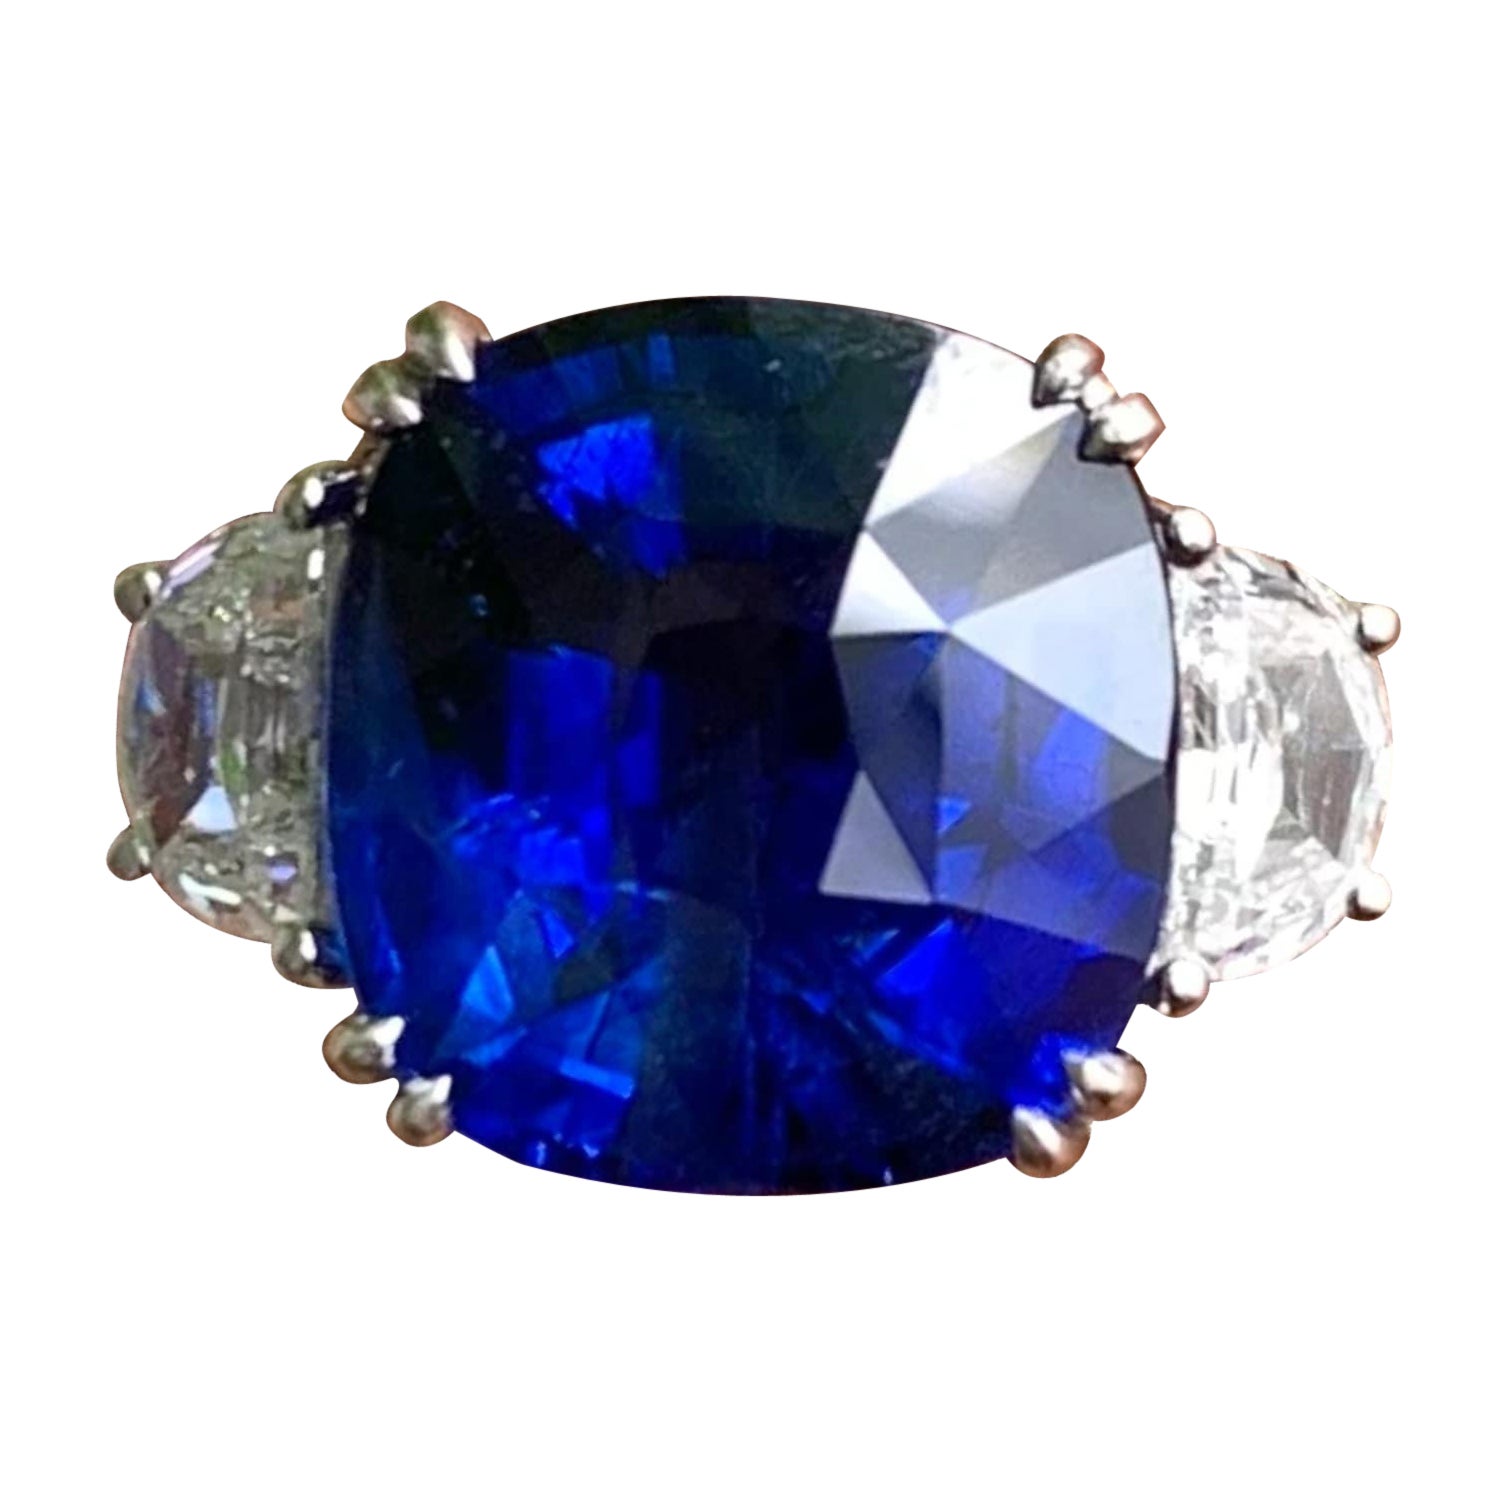 What gemstone is light blue?